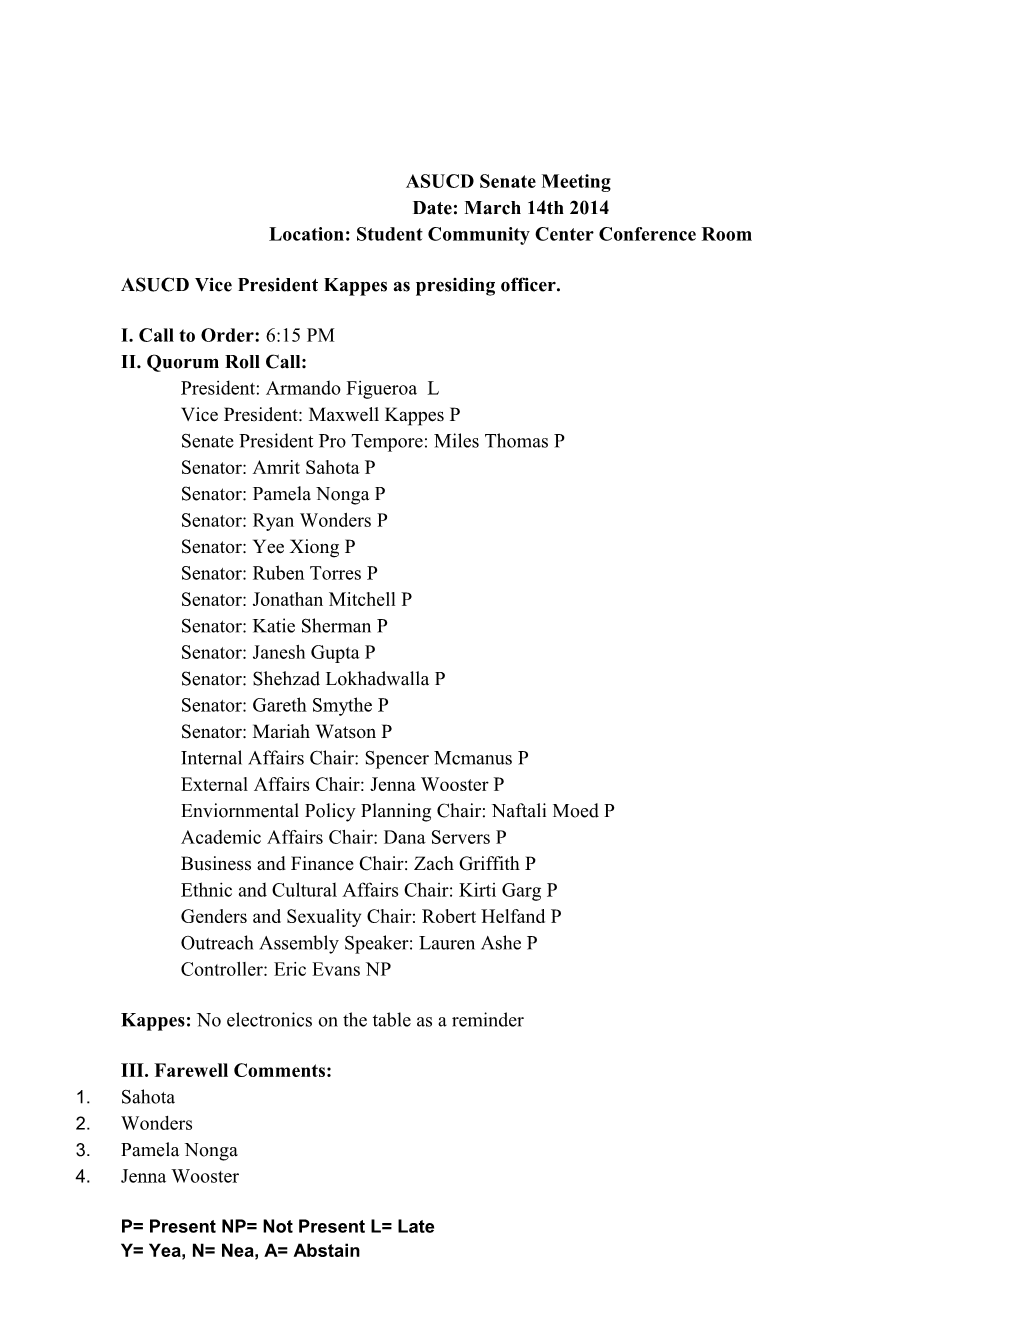 ASUCD Senate Minutes: 3/14/2014